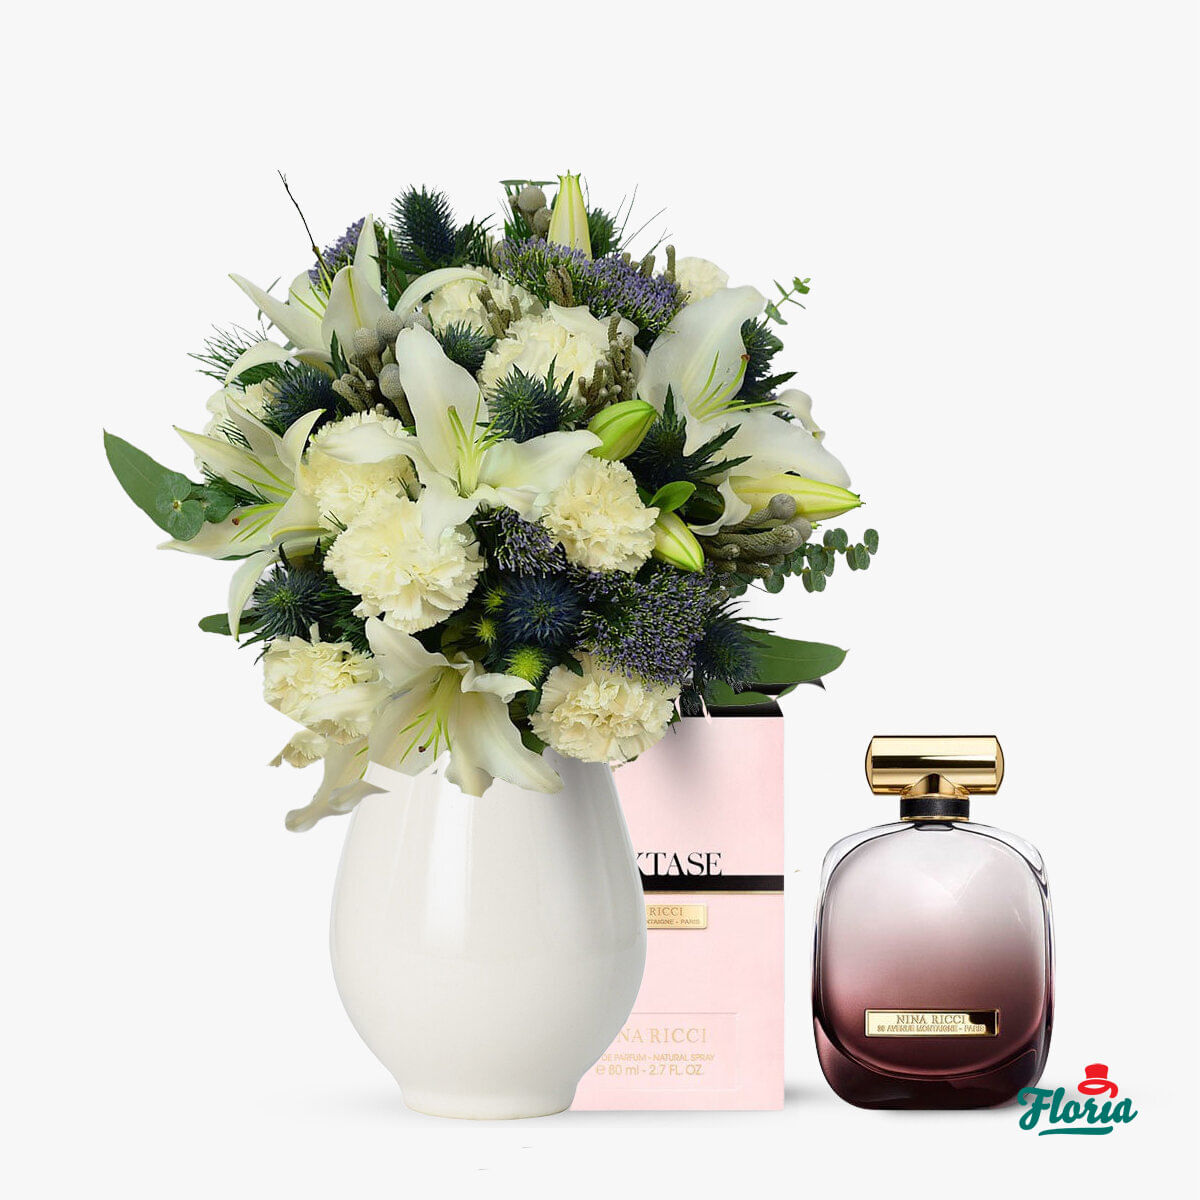 O noapte speciala si parfum – Standard Floria